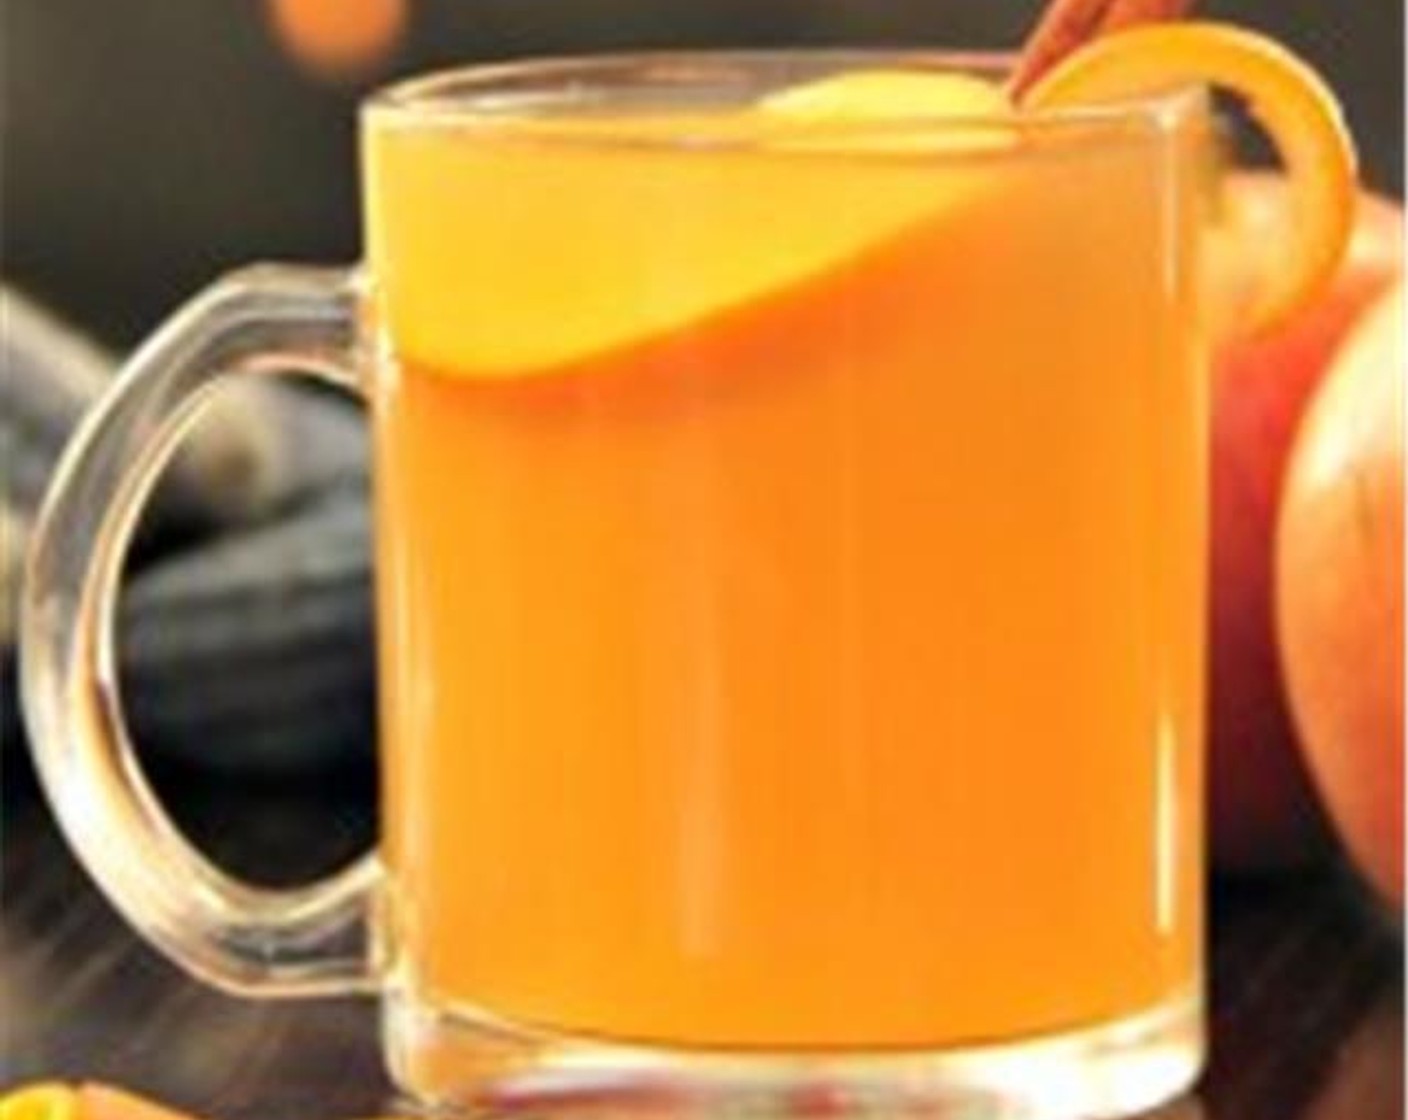 Orange Apple Cider